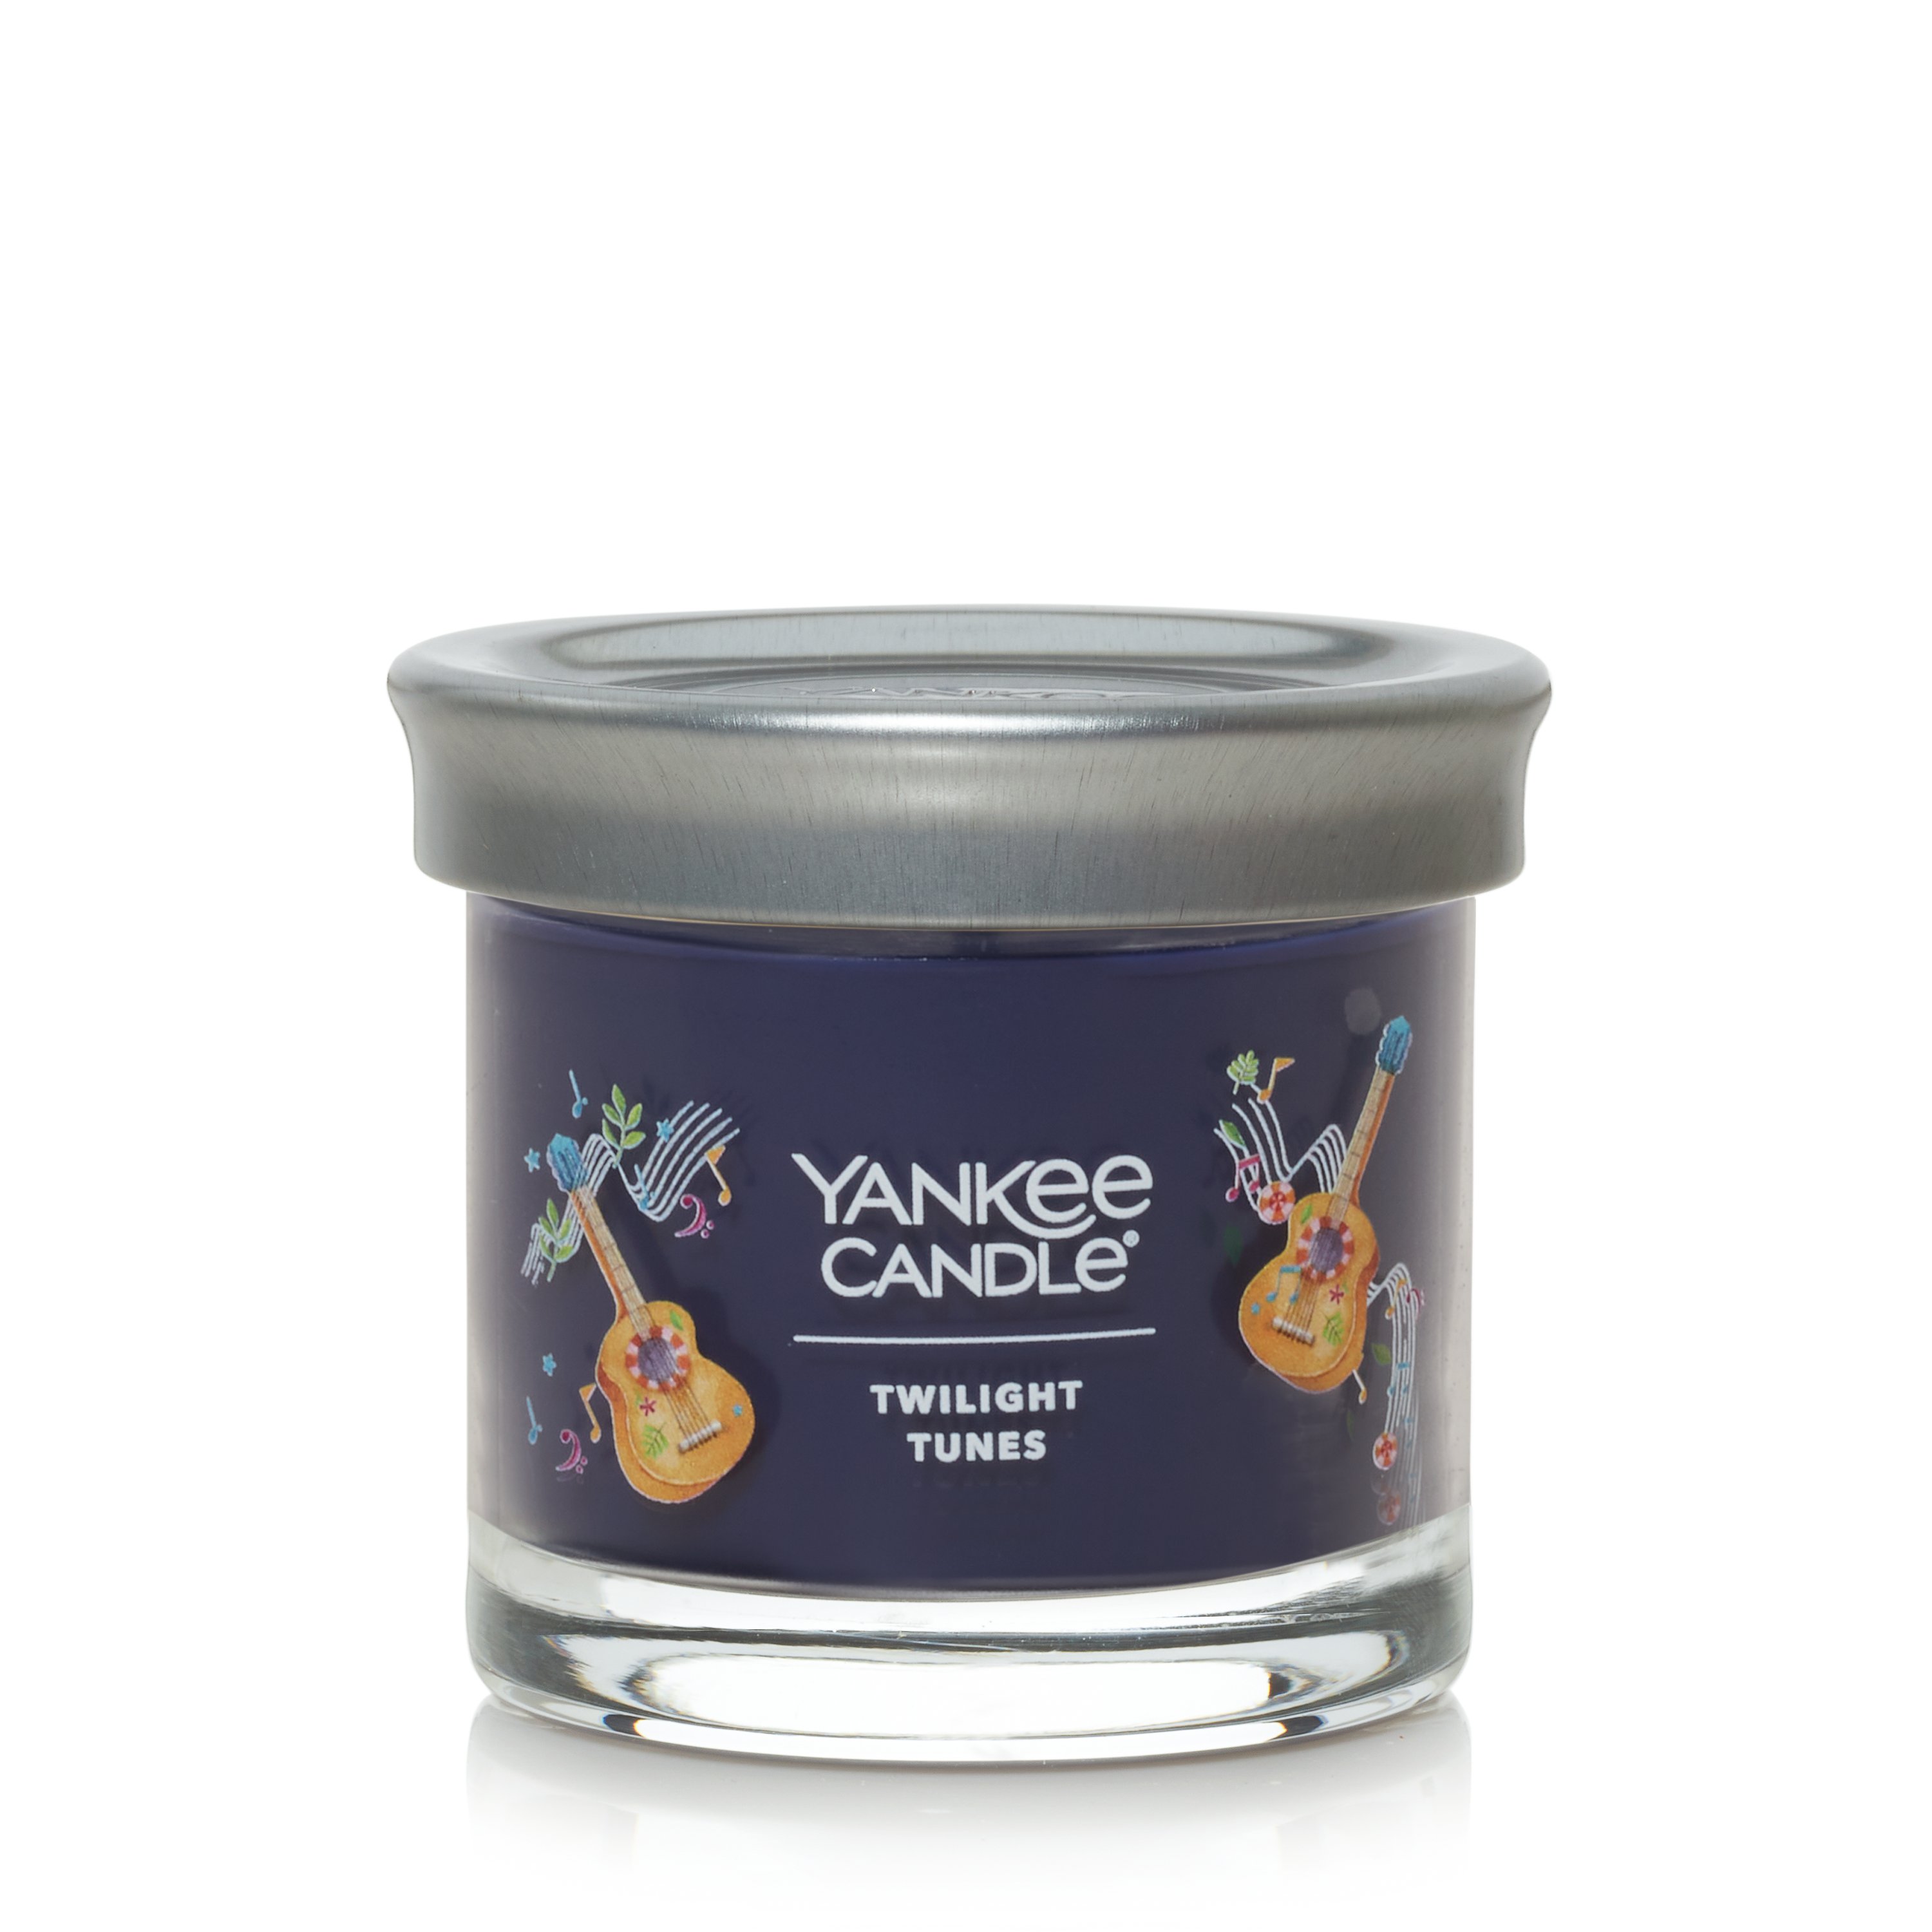 Yankee Candle Scent Twilight Tunes - Original Large Jar 22oz NEW & FREE  SHIPPING